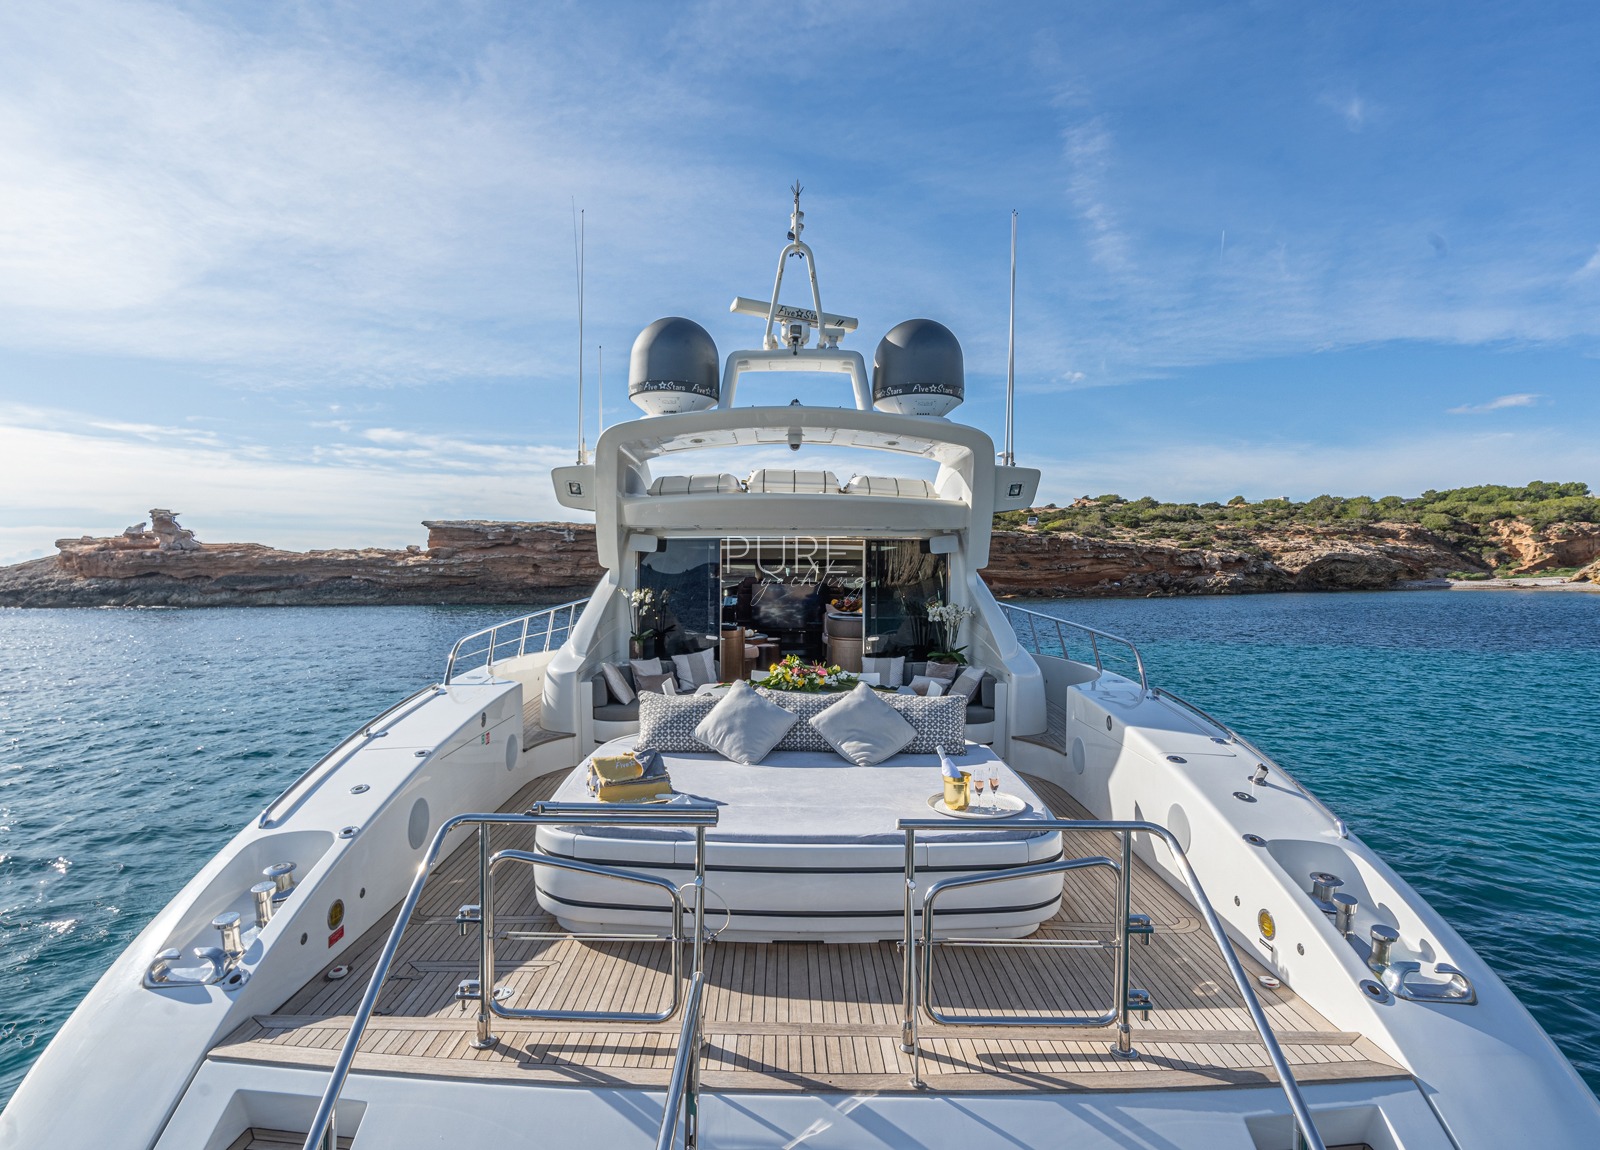 oberdeck sunbeds luxusyacht mangusta 92 five stars balearic islands